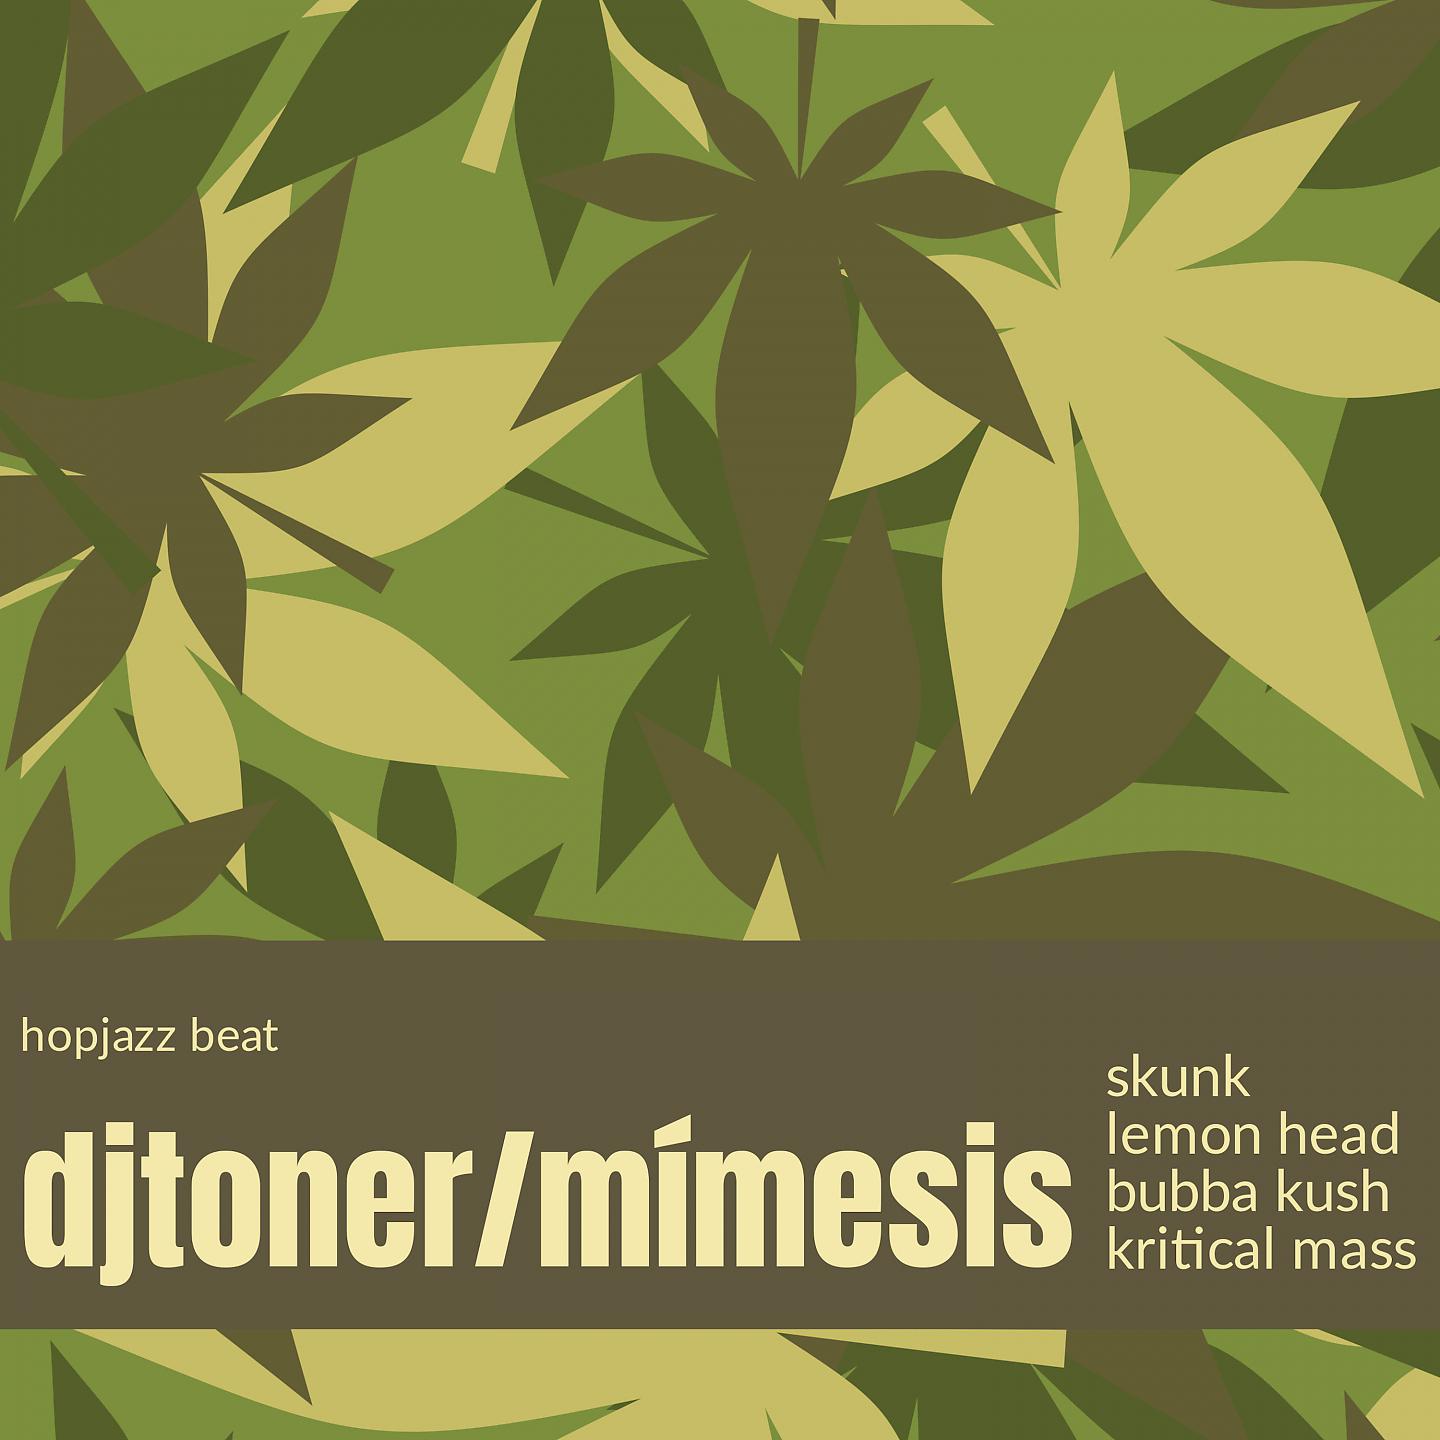 Постер альбома Mimesis